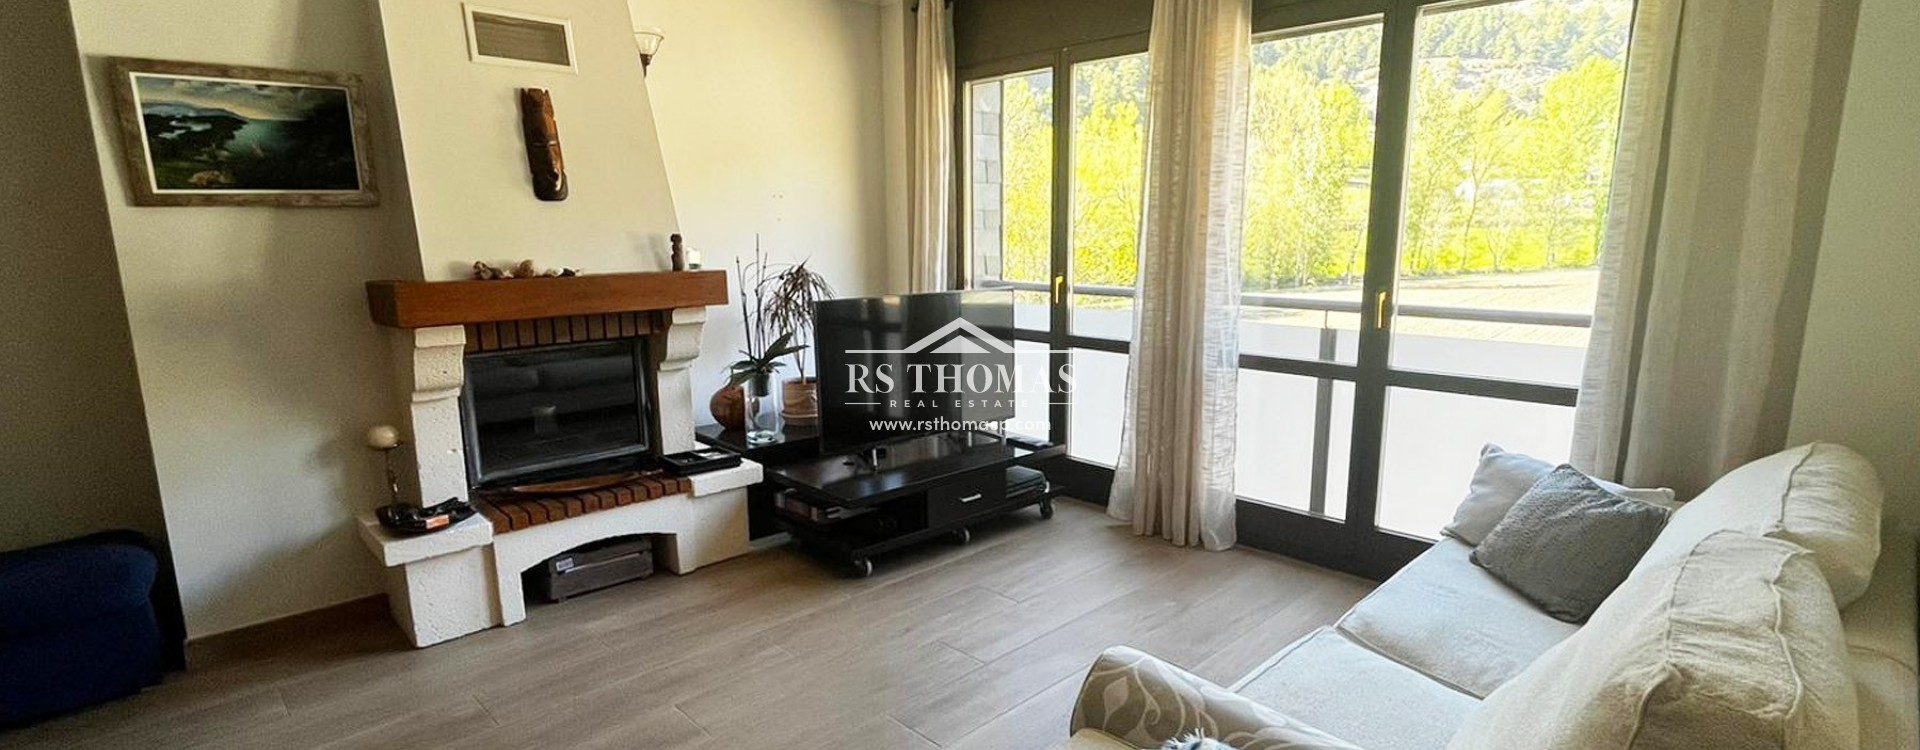 Apartment for sale Ordino | RS Thomas Real Estate